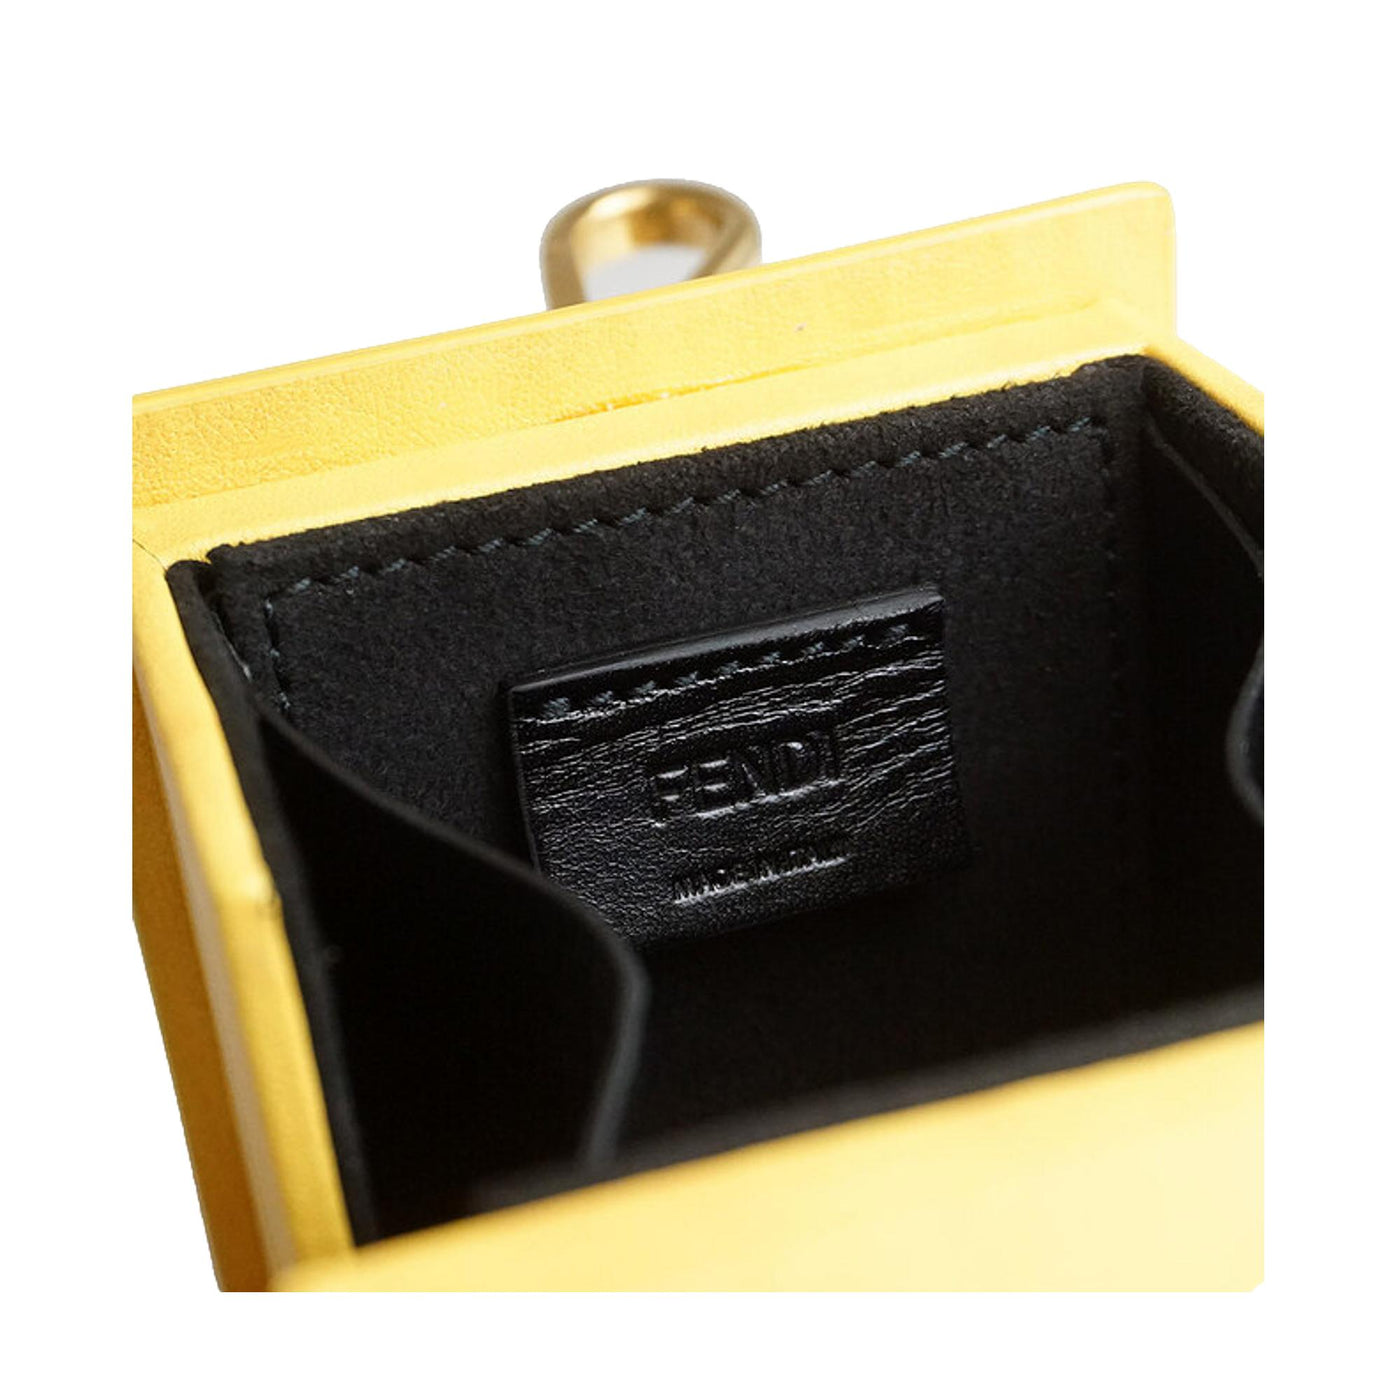 Fendi Roma Mini Box Yellow Leather Key Ring Charm - LUXURYMRKT